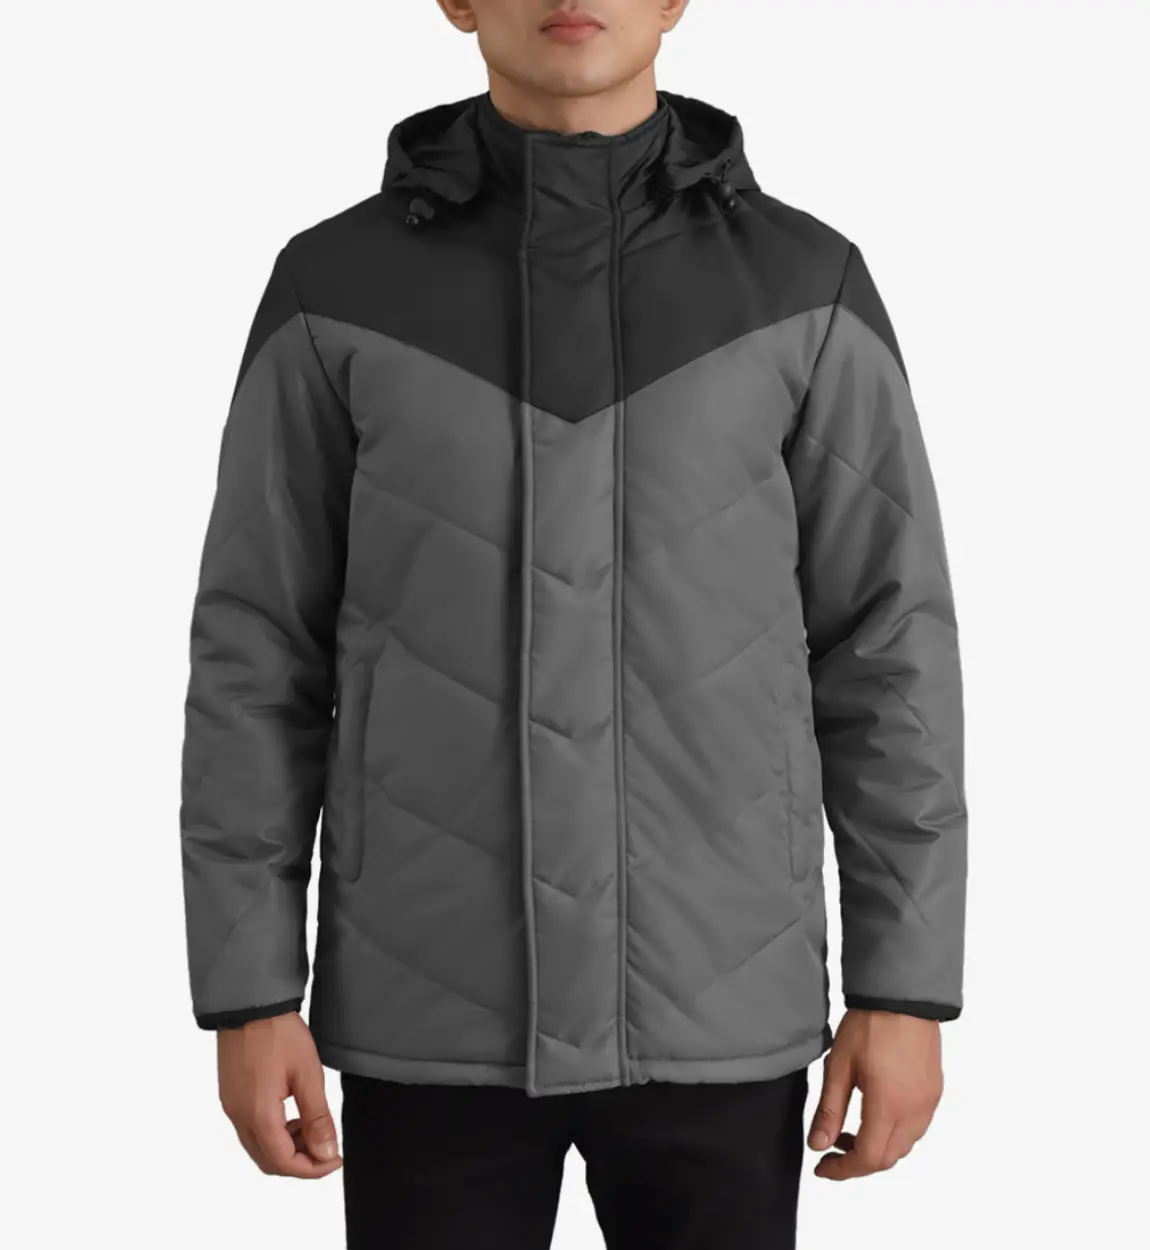 Black & Grey Hooded Puffer Jacket Tendon Sports